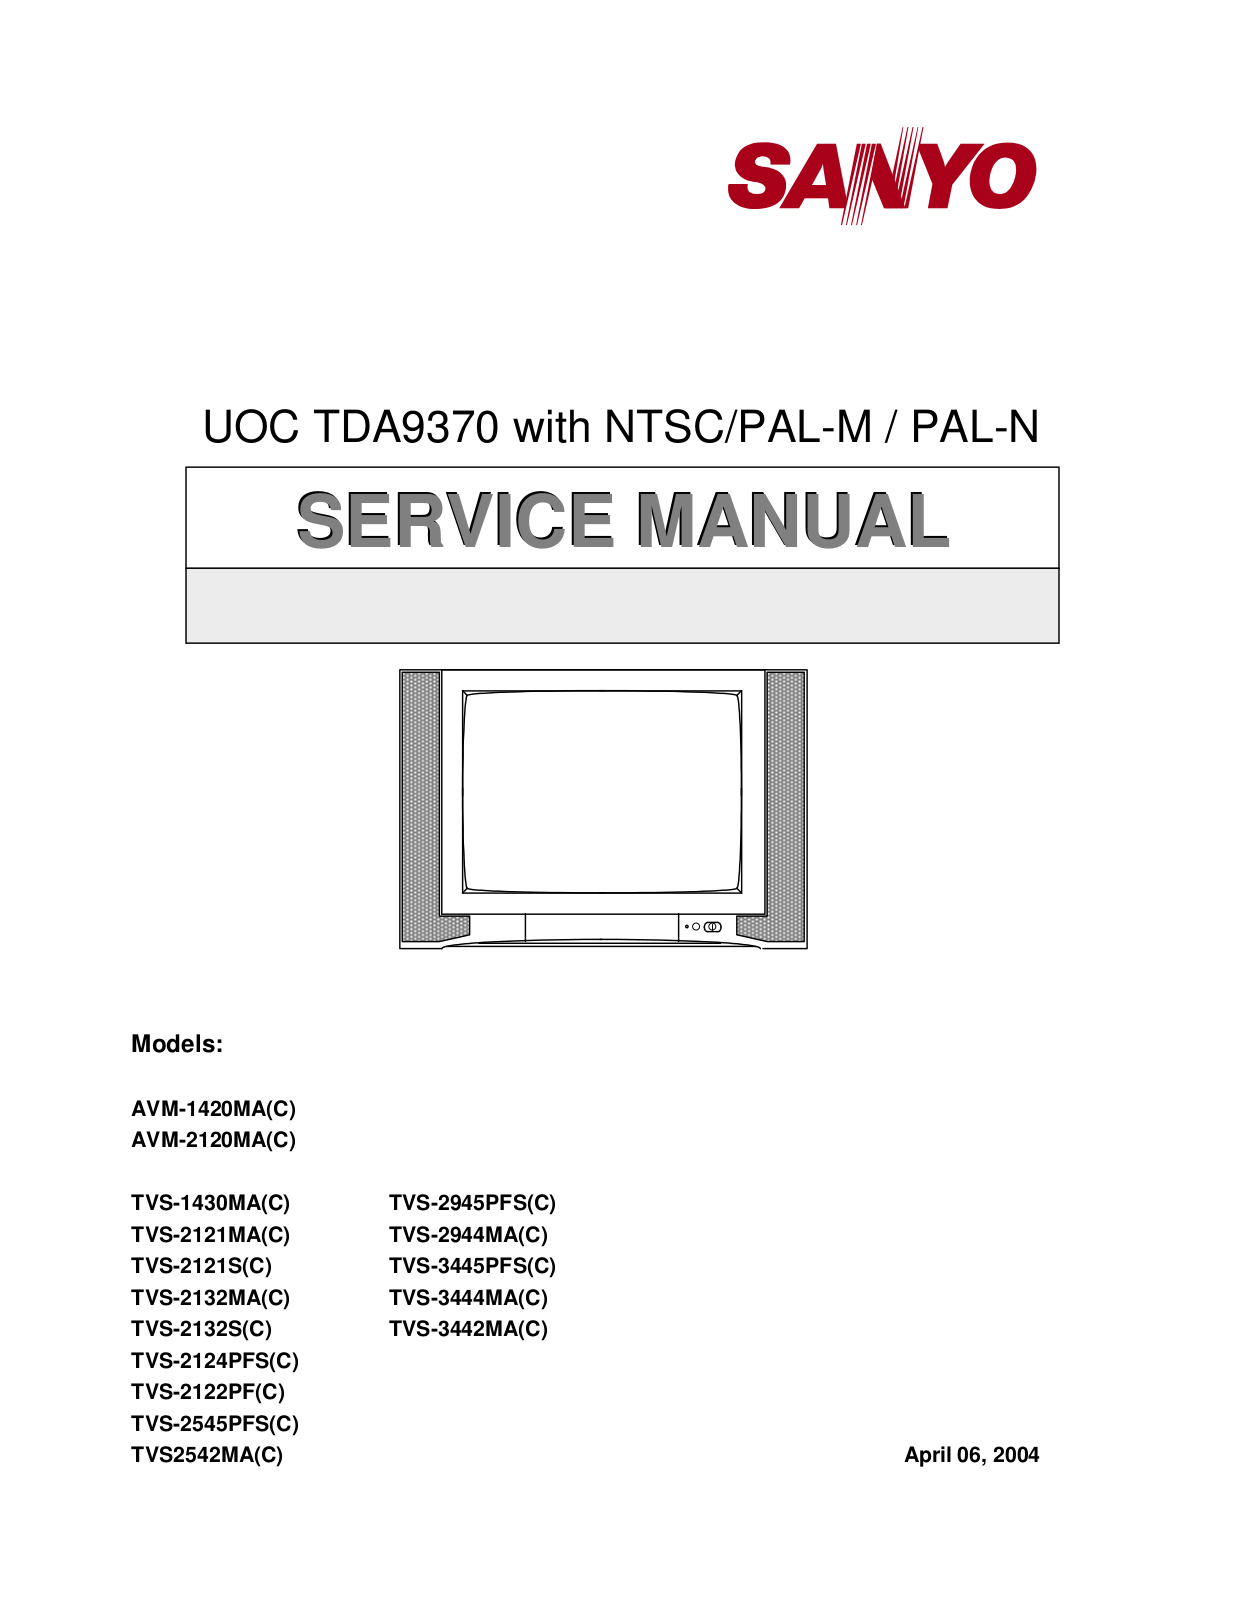 SANYO AVM-1420MA-C, AVM-2120MA-C, TVS-1430MA-C, TVS-2945PFS-C, TVS-2121MA-C Service Manual